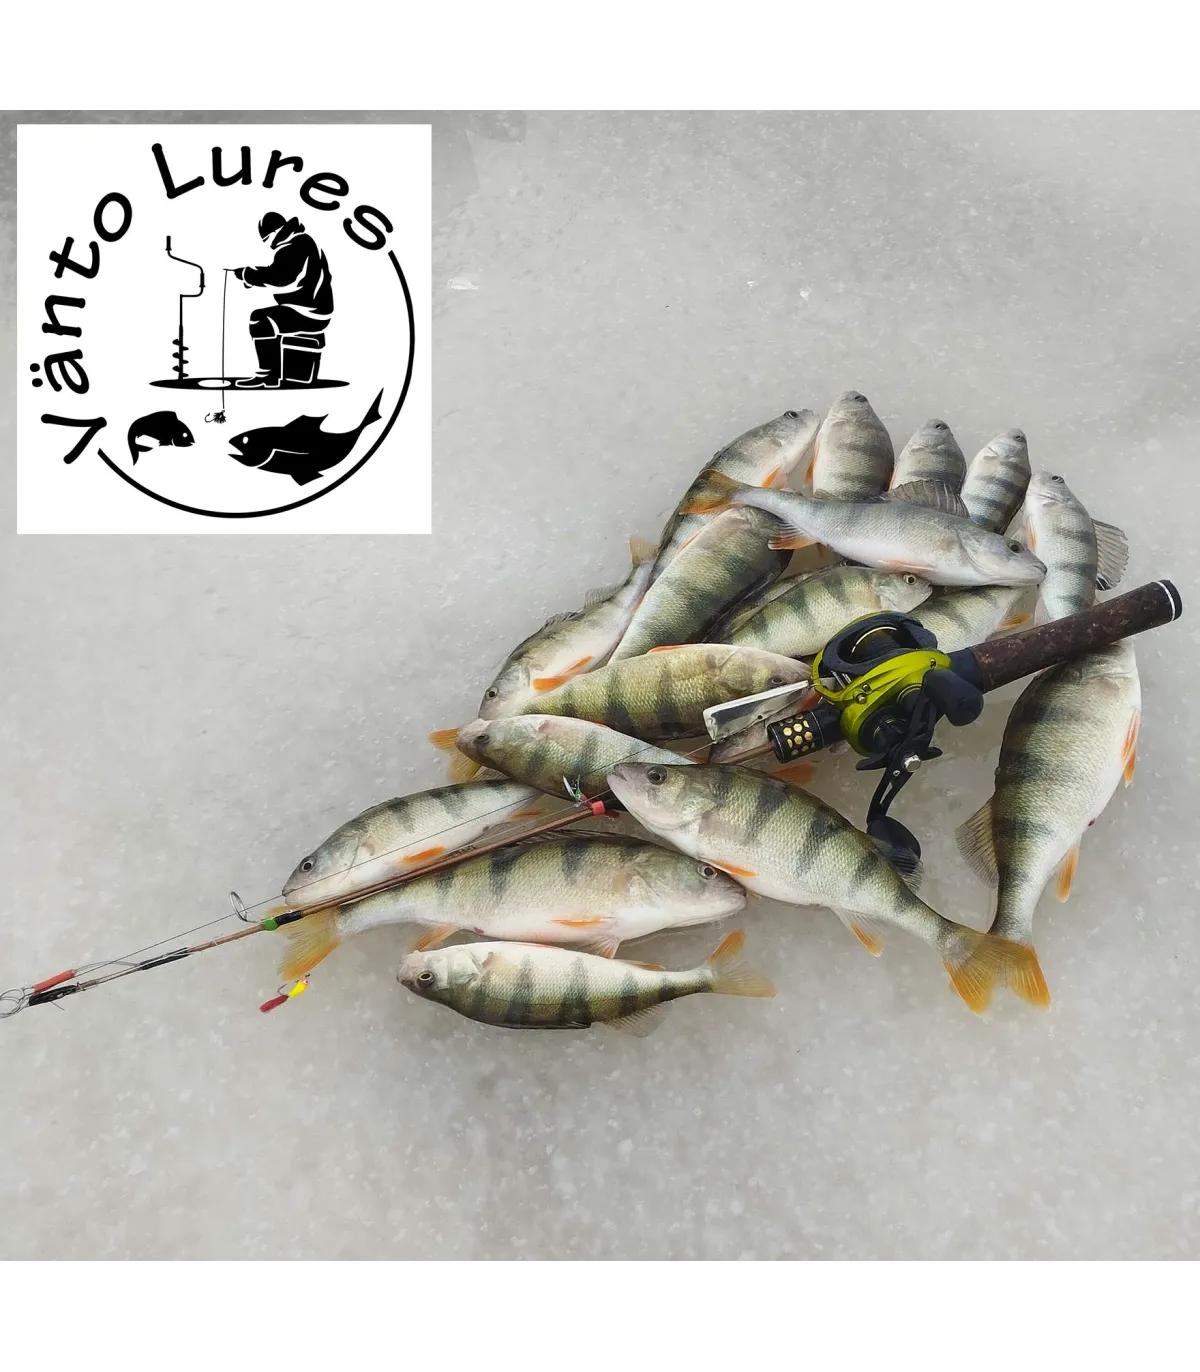 Jumbo Perch Ice Fishing Tips: Spring Bobber 